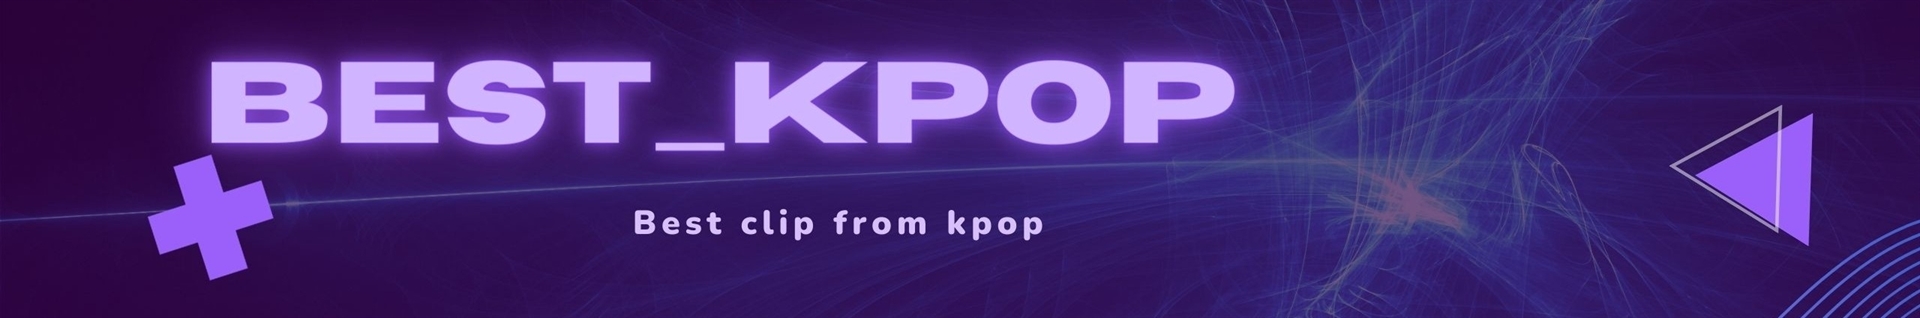 kpop music video edit